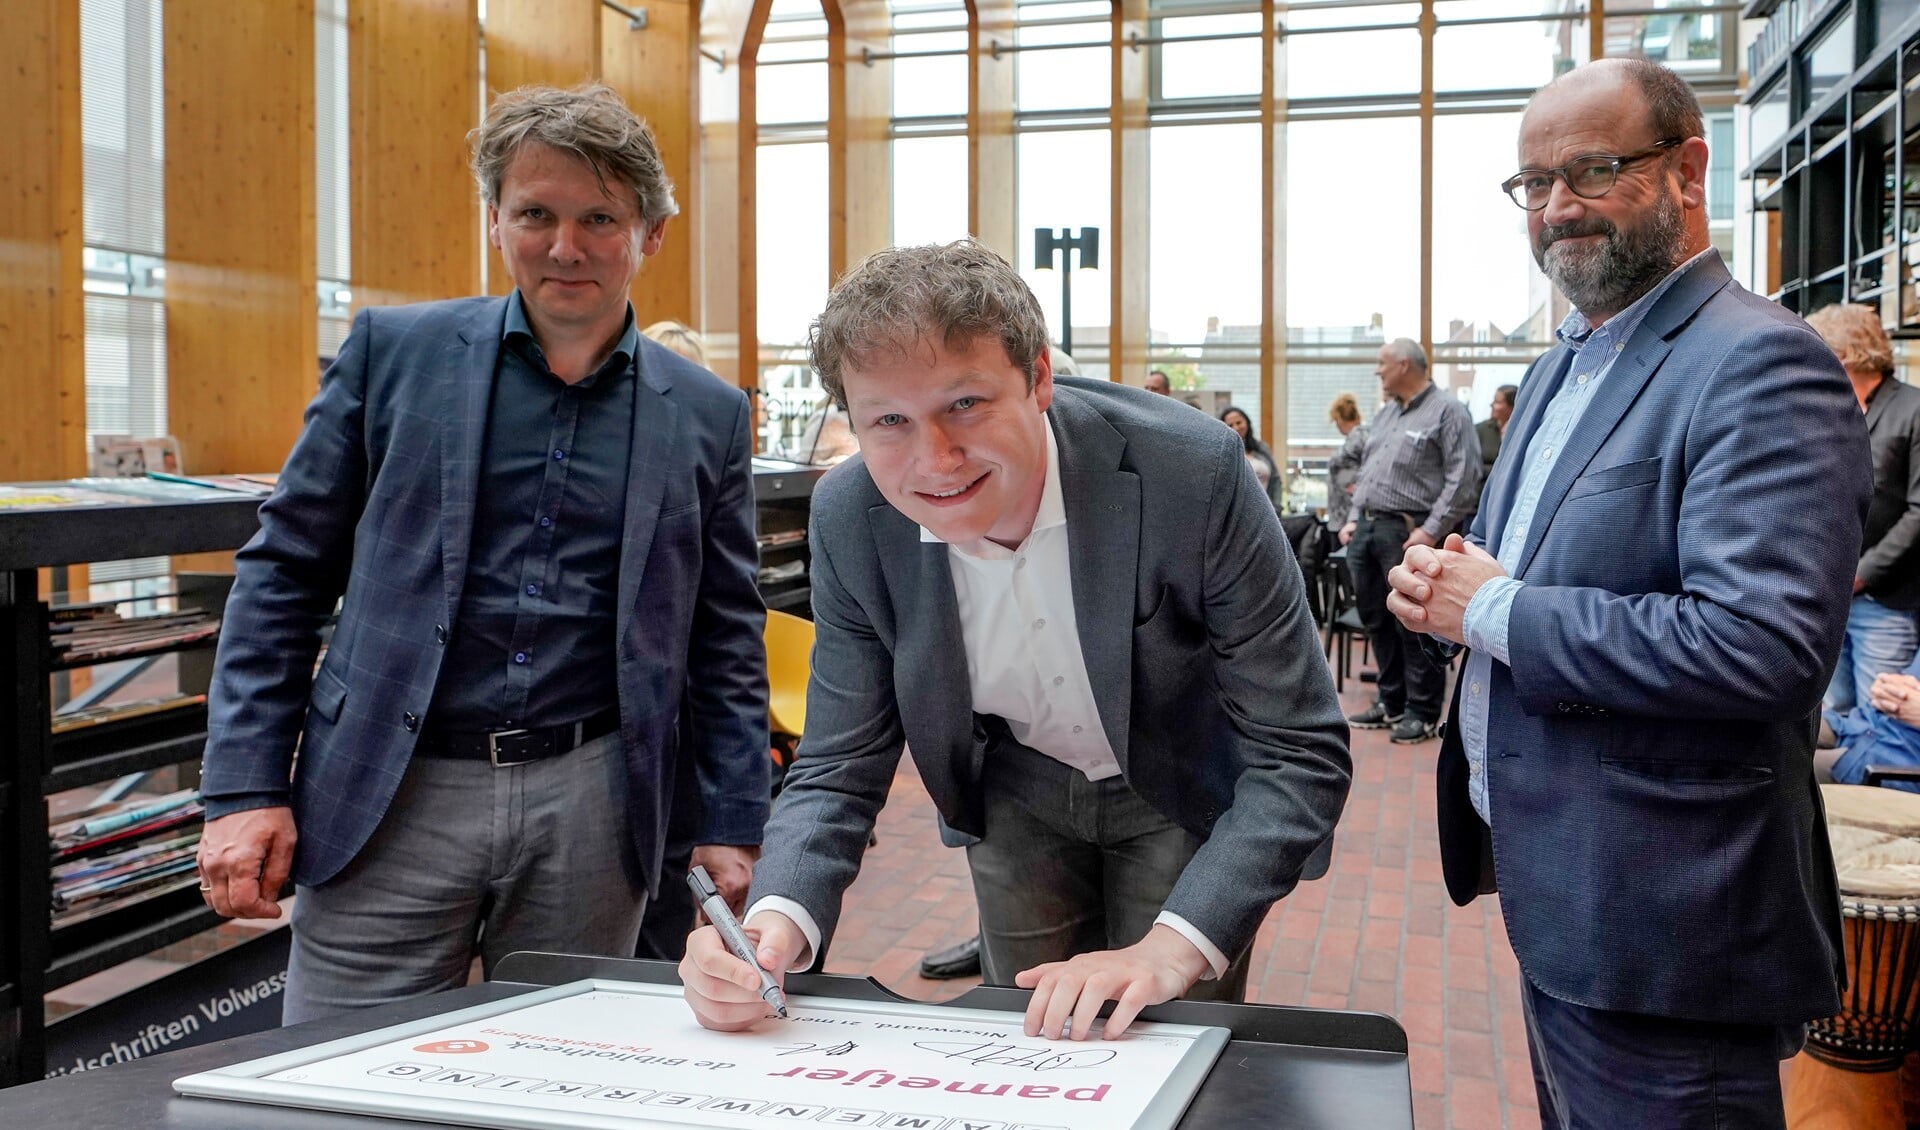 Wethouder Bal ondertekende namens de gemeente de samenwerkingsovereenkomst. Foto: Foto-OK.nl